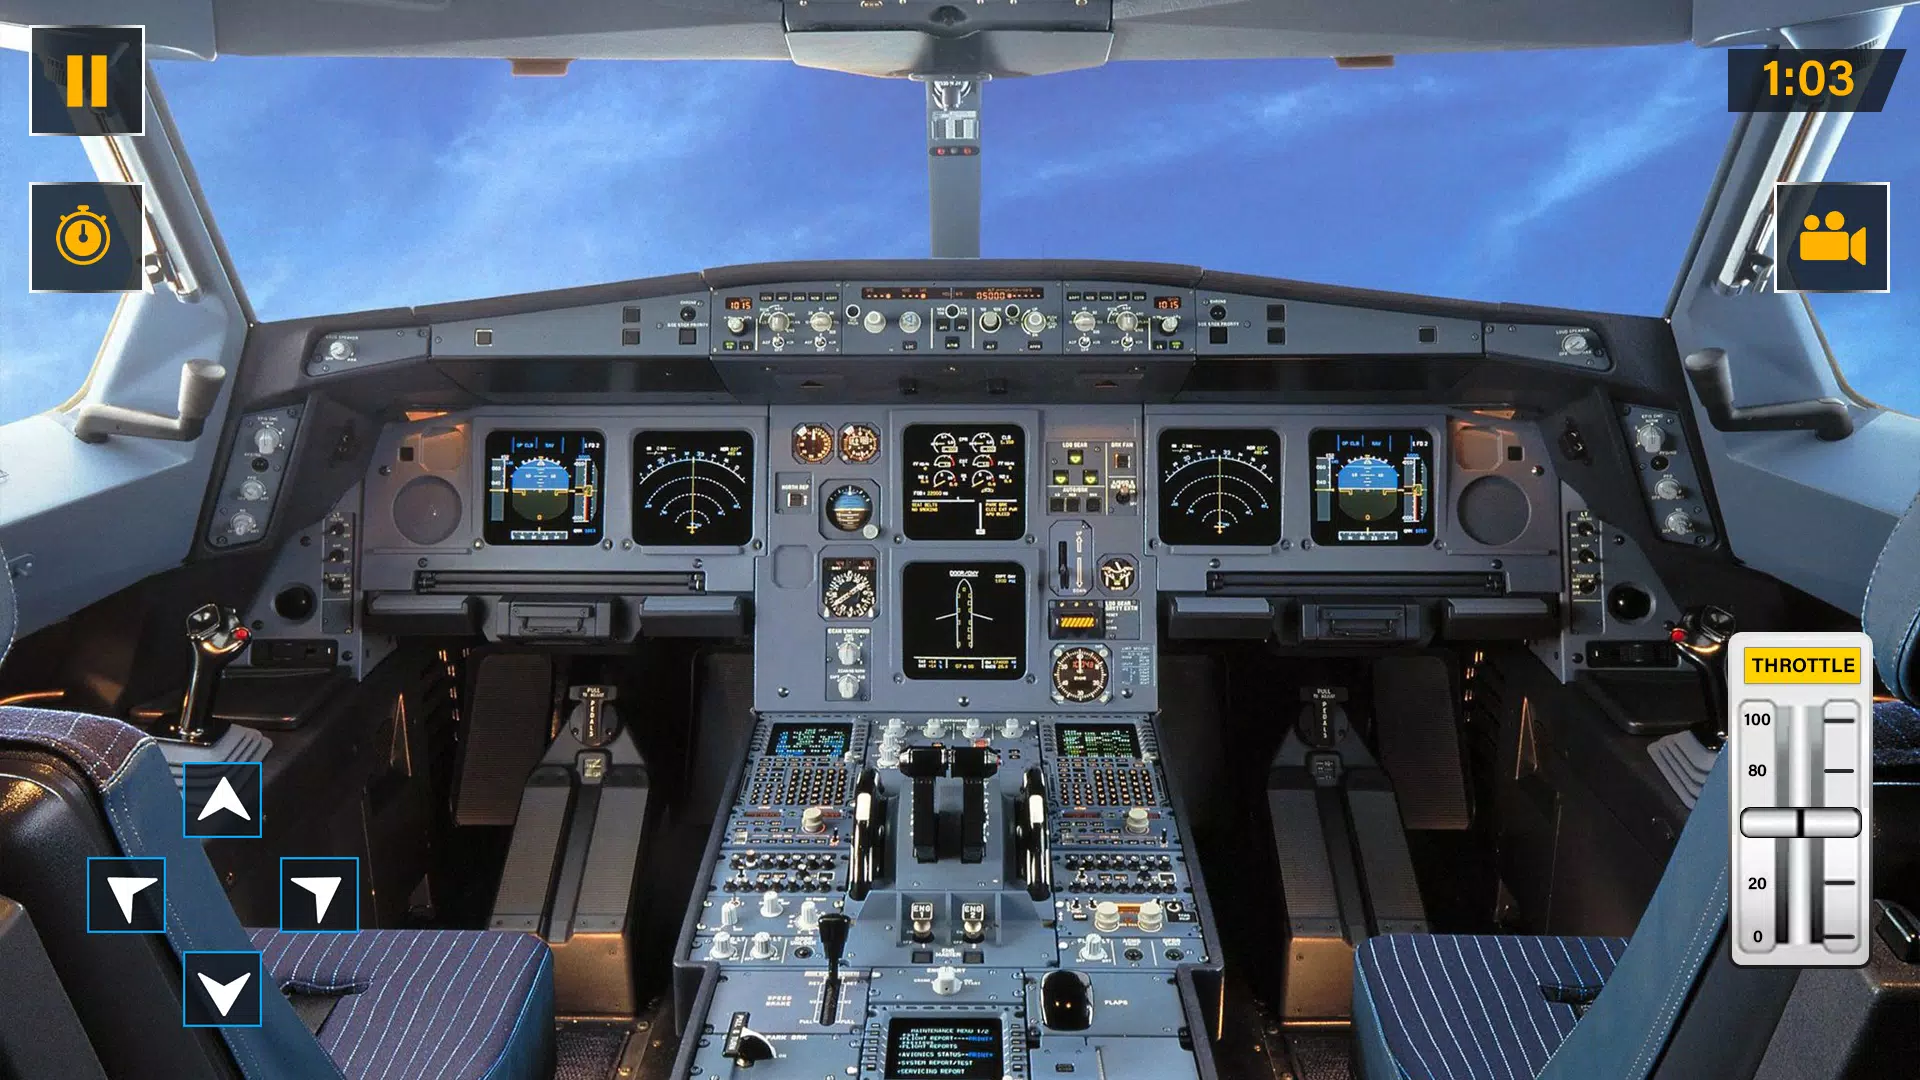 Flight Simulator Plane Game 3D Apk Download for Android- Latest version 2-  com.airplane.offline.game.city.pilot.simulator.planegame